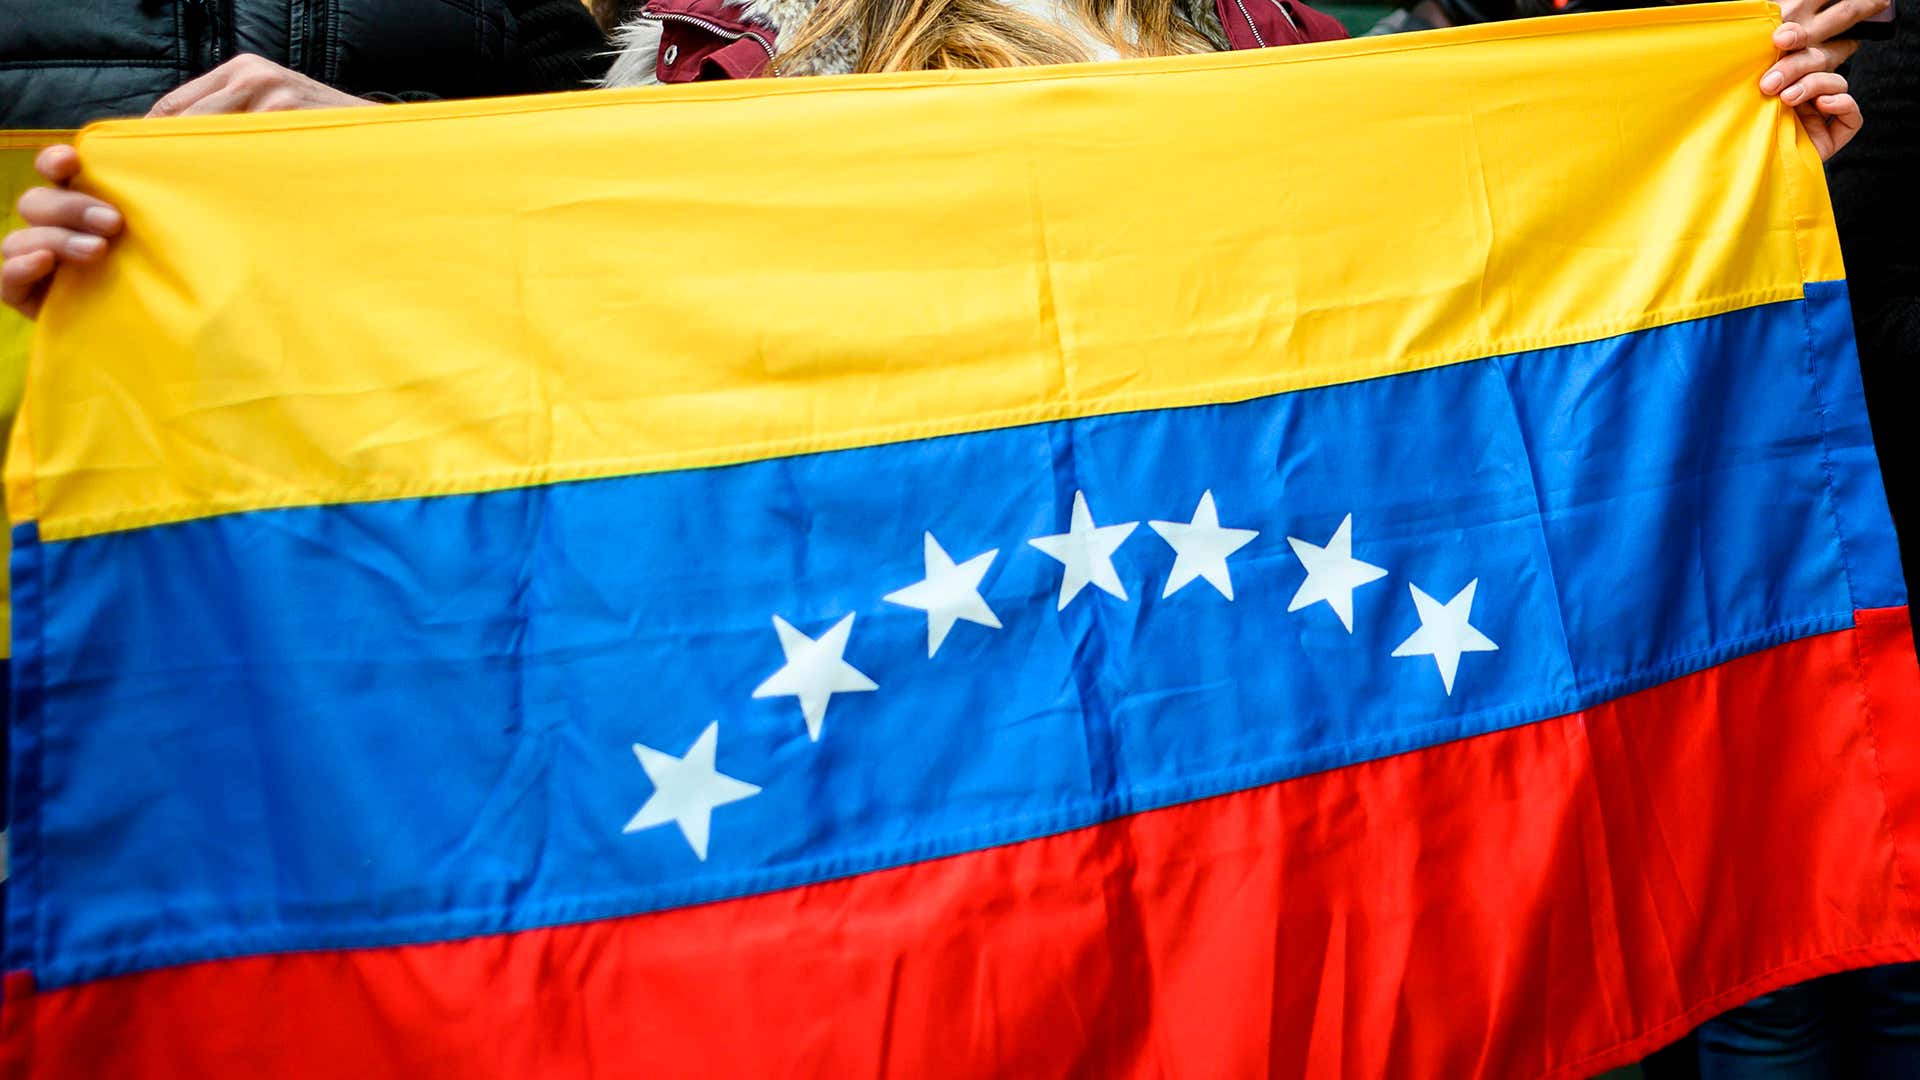 Venezuela bandeira flag